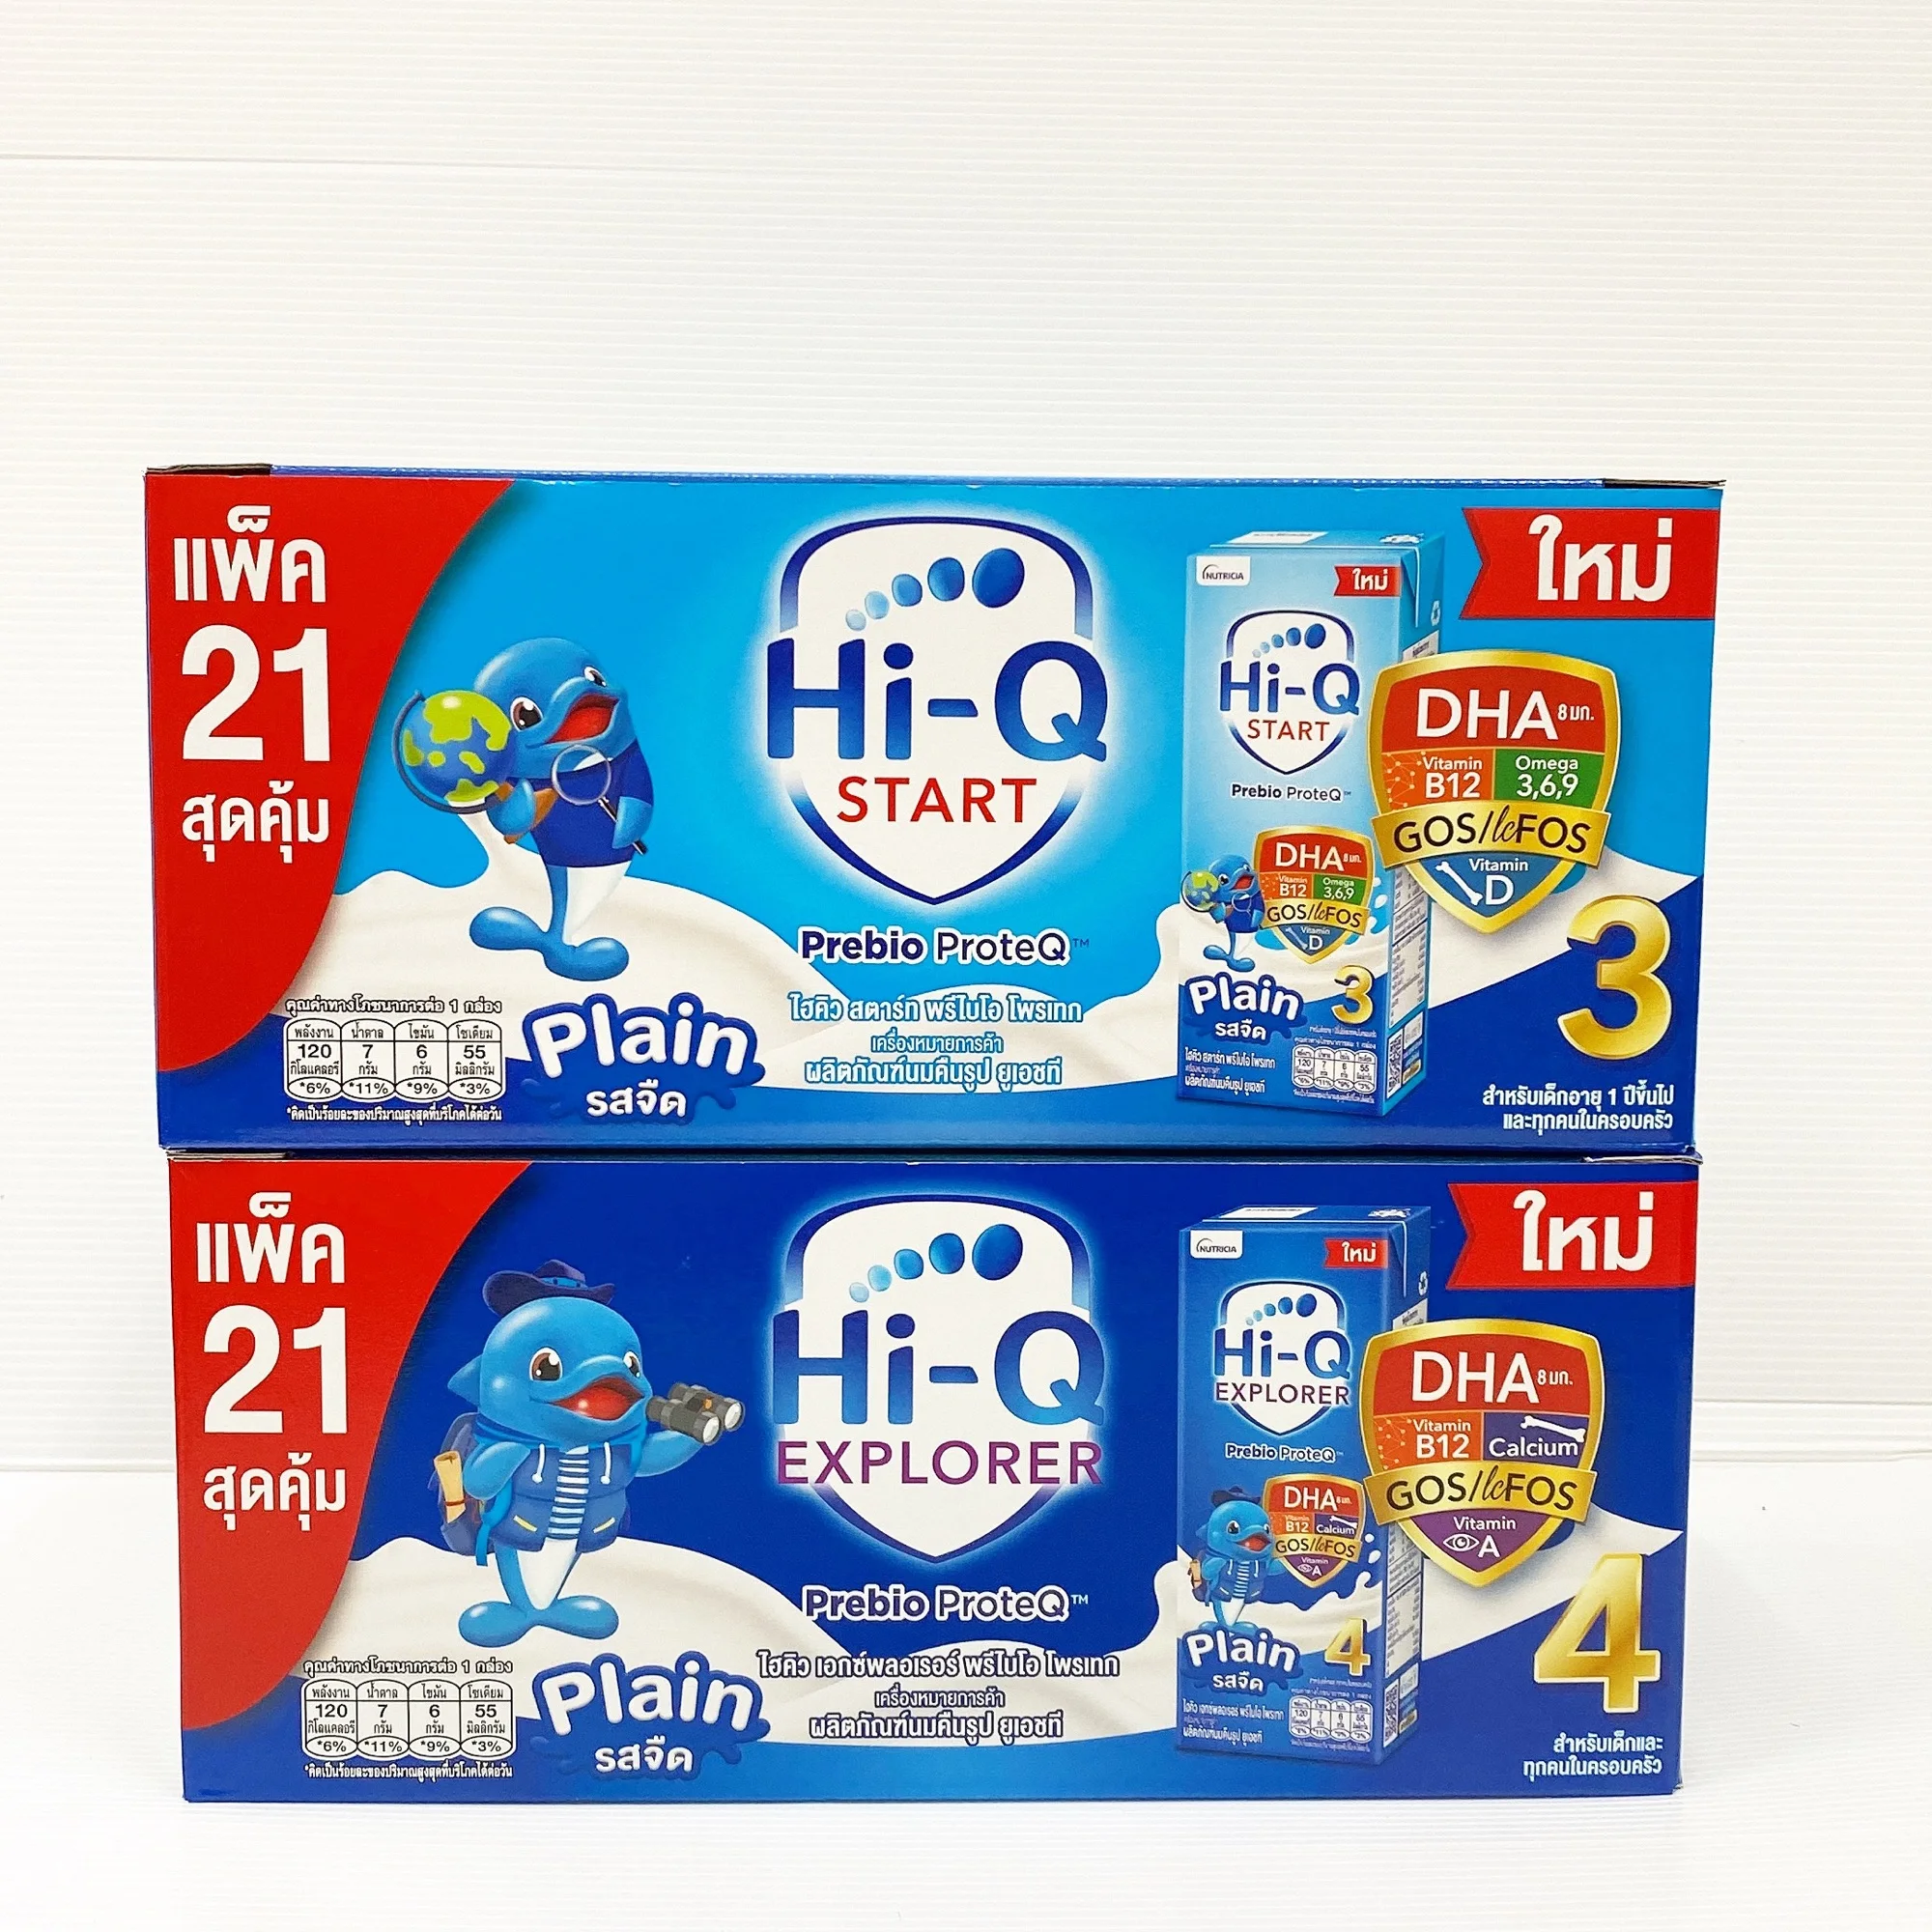 Hi-Q UHT ไฮคิว พรีไบโอ โพรเทค โฉมใหม่ ขนาด 180 ml. 21 กล่อง (วันหมดอายุแจ้งในรายละเอียดสินค้า)